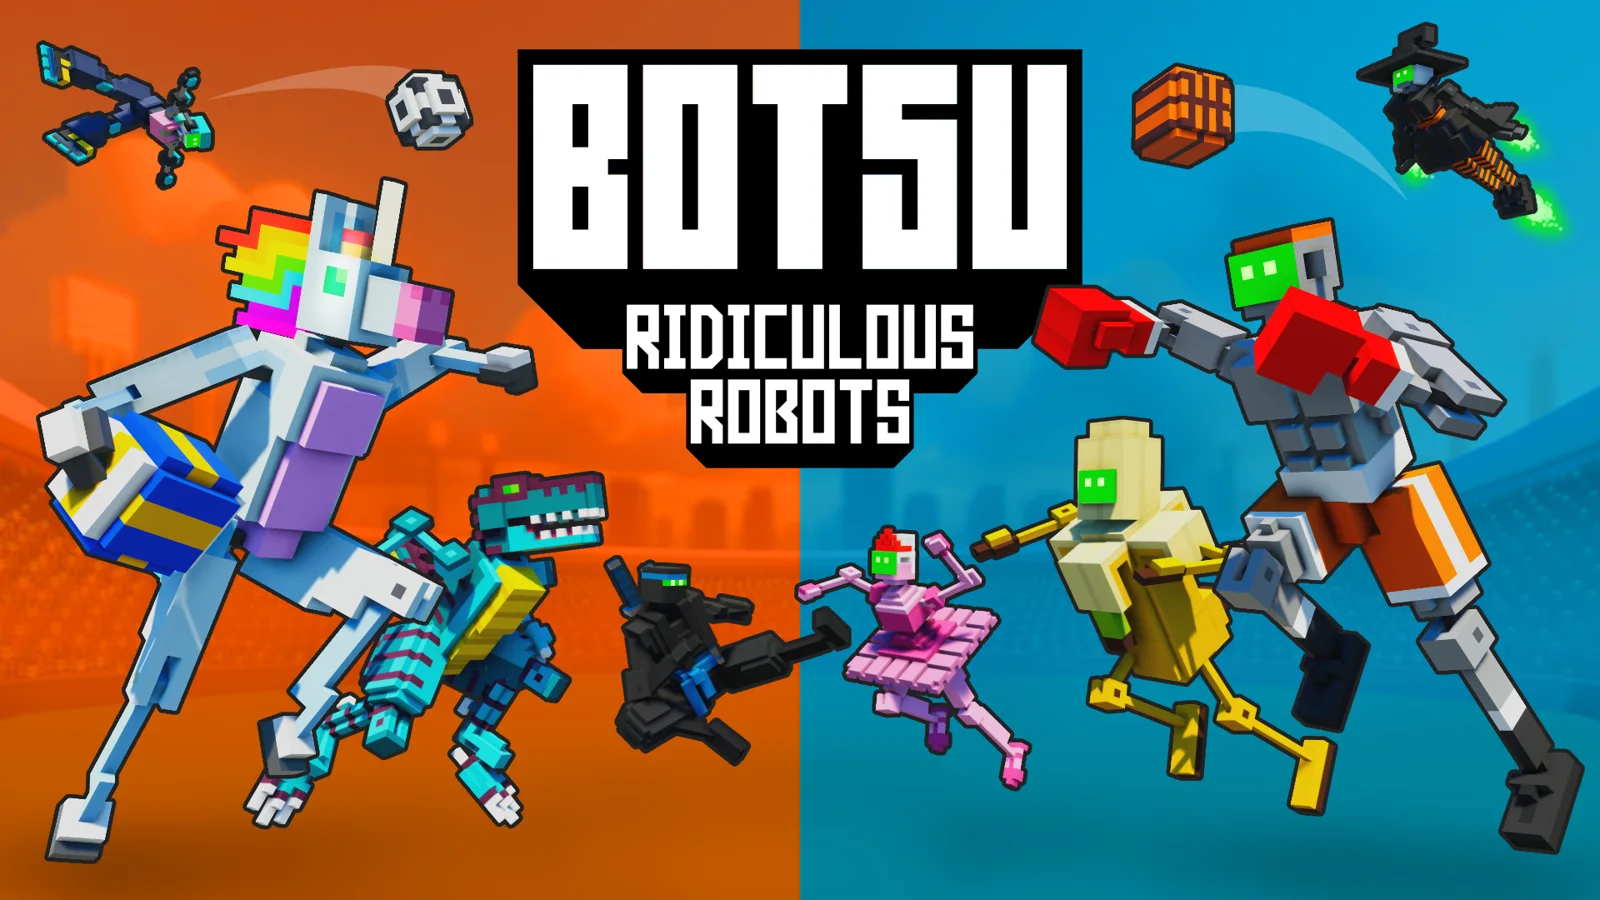 BotsuRidiculousRobots